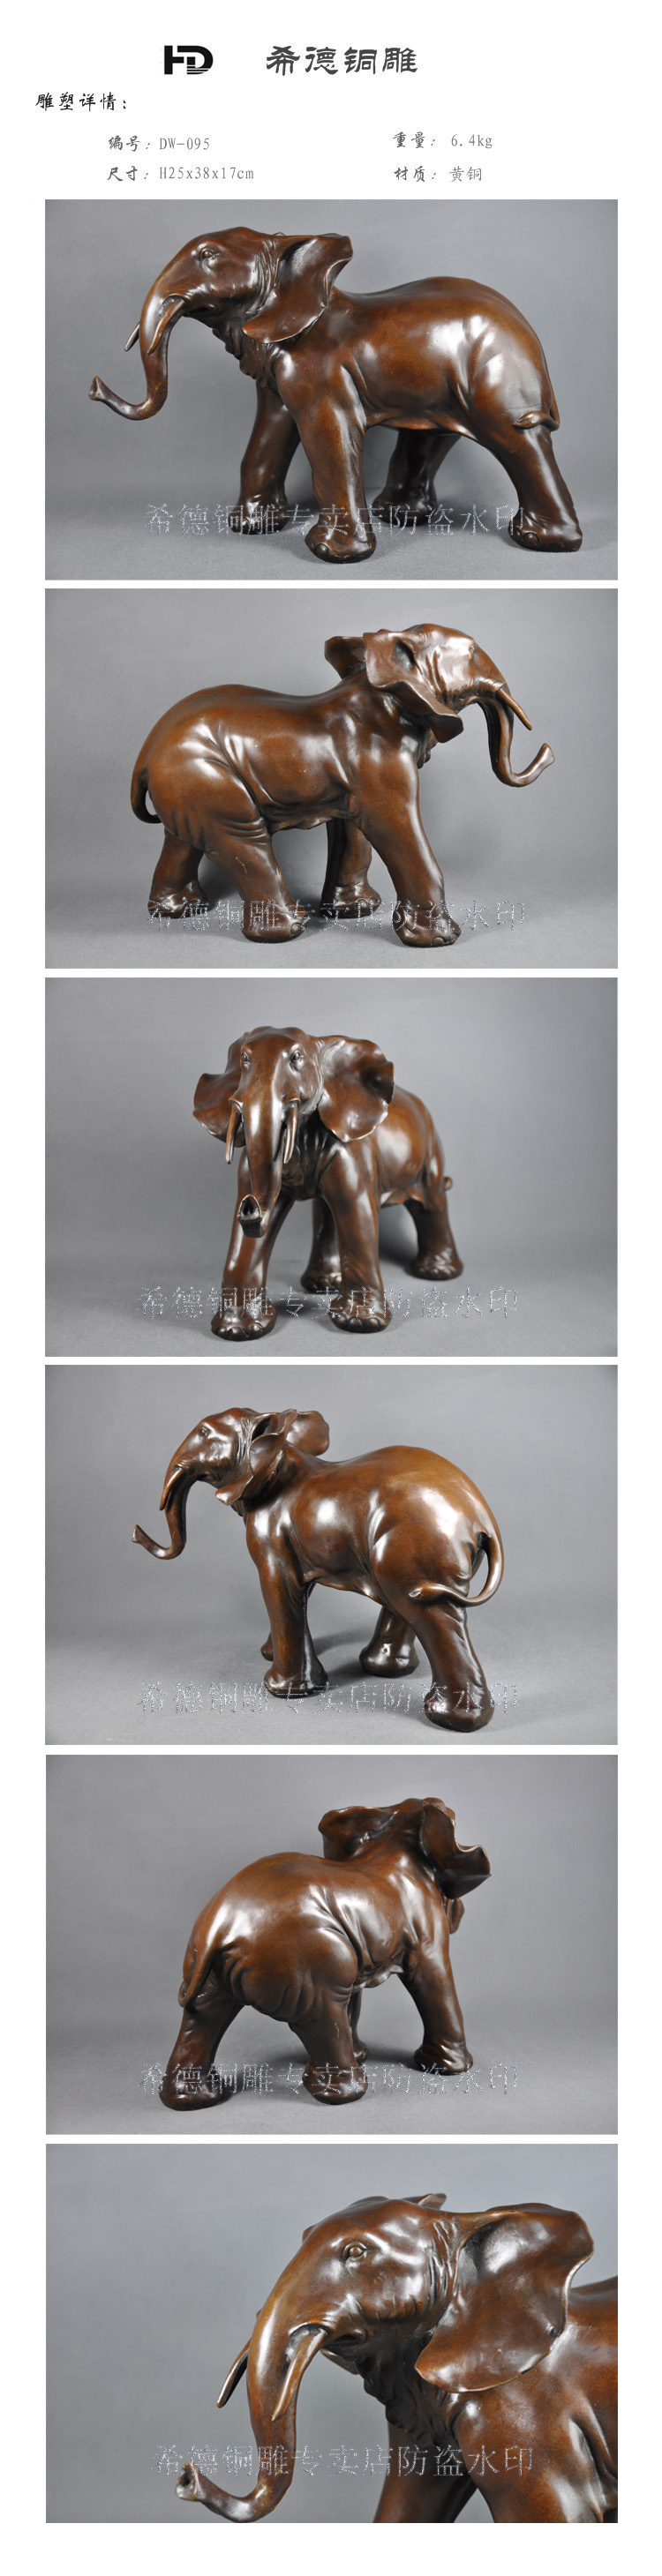 Copper crafts decoration copper sculpture animal lucky elephant dw-095